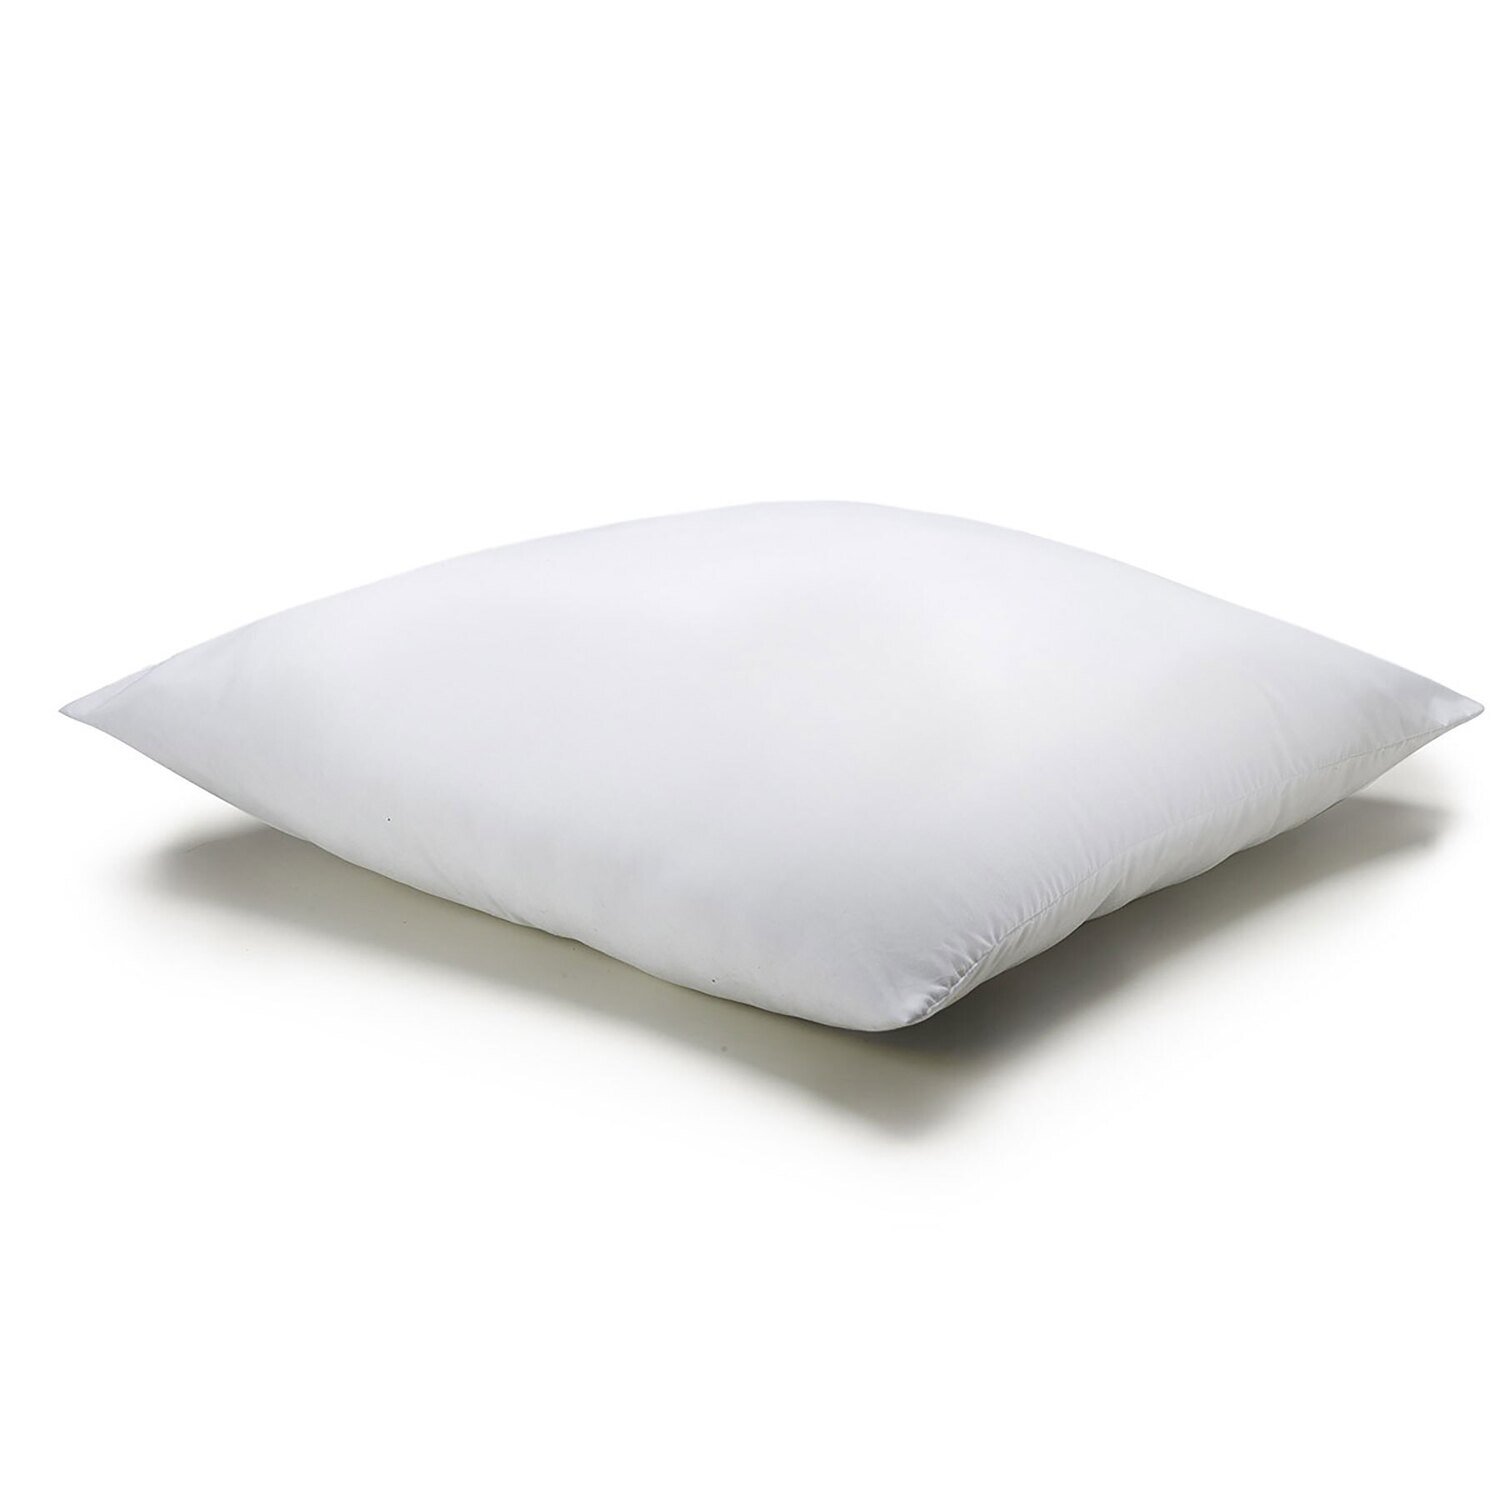 Le Jacquard Francais Coussin White Cushion 16 x 16 Inch 25462